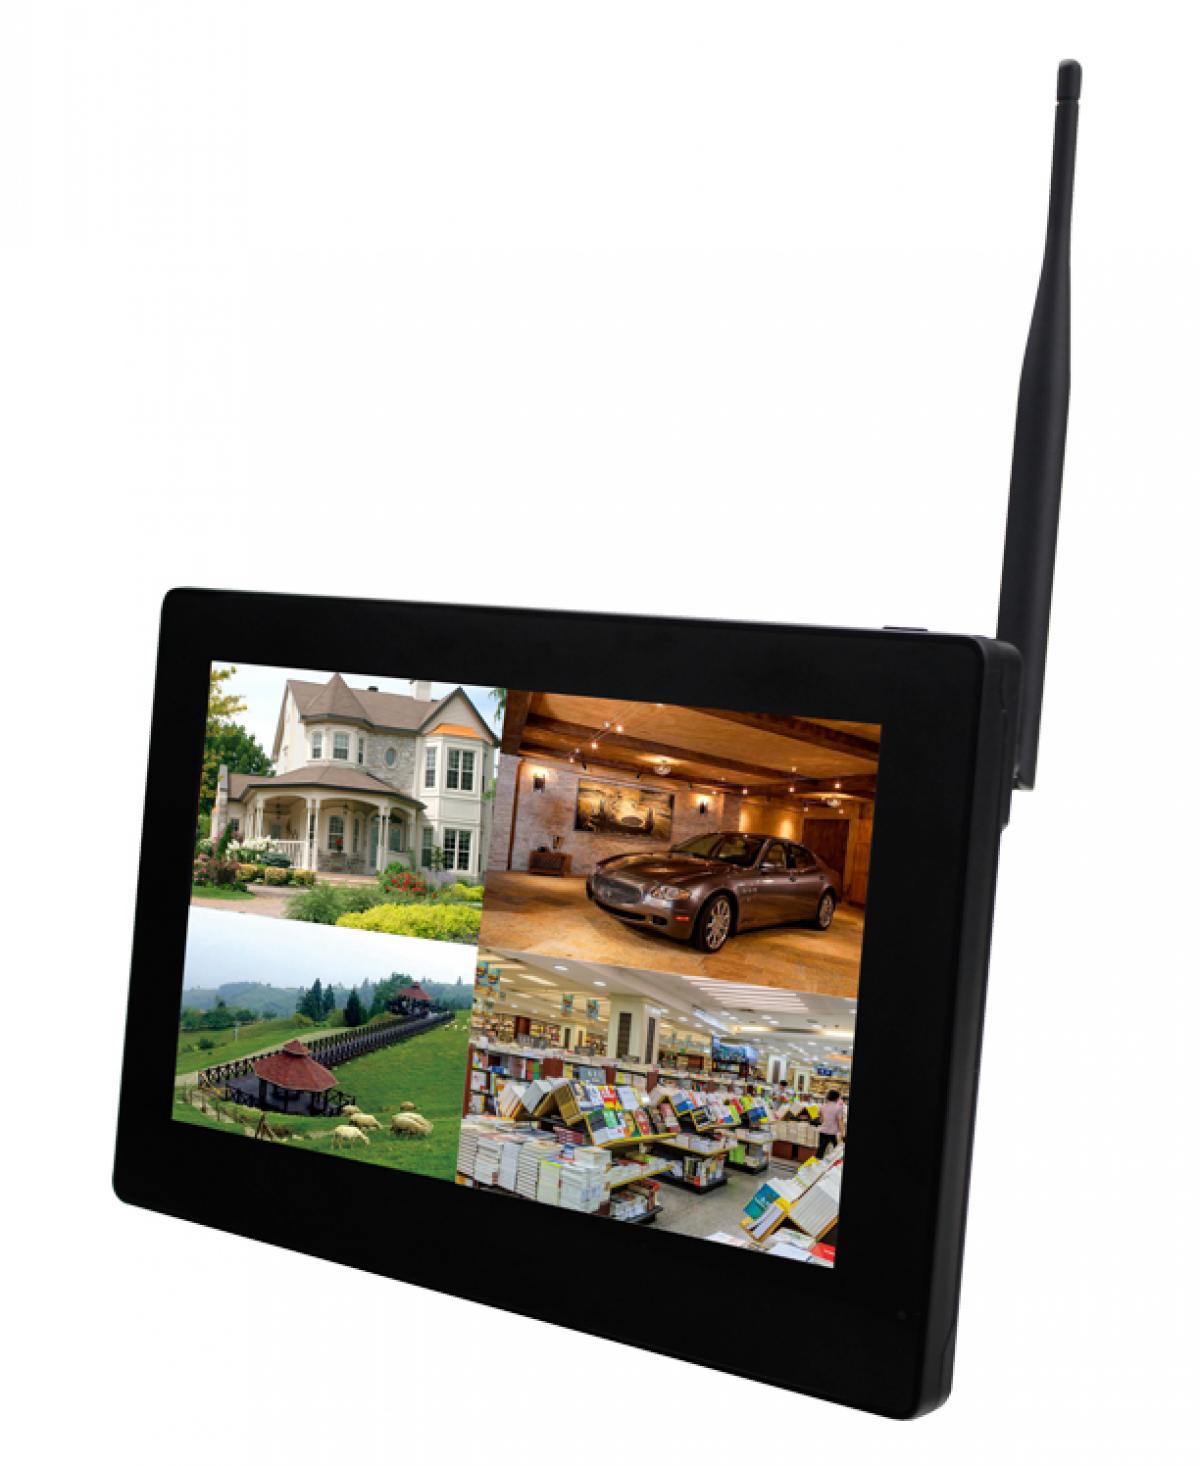 LOGSER AG - 9 Zoll Full-Touch inkl. Wifi Adapter, Funk Videoüberwachung HD 720p Echtzeit, 500GB SATA Festplatte, 3x Nachtsicht Kamera     